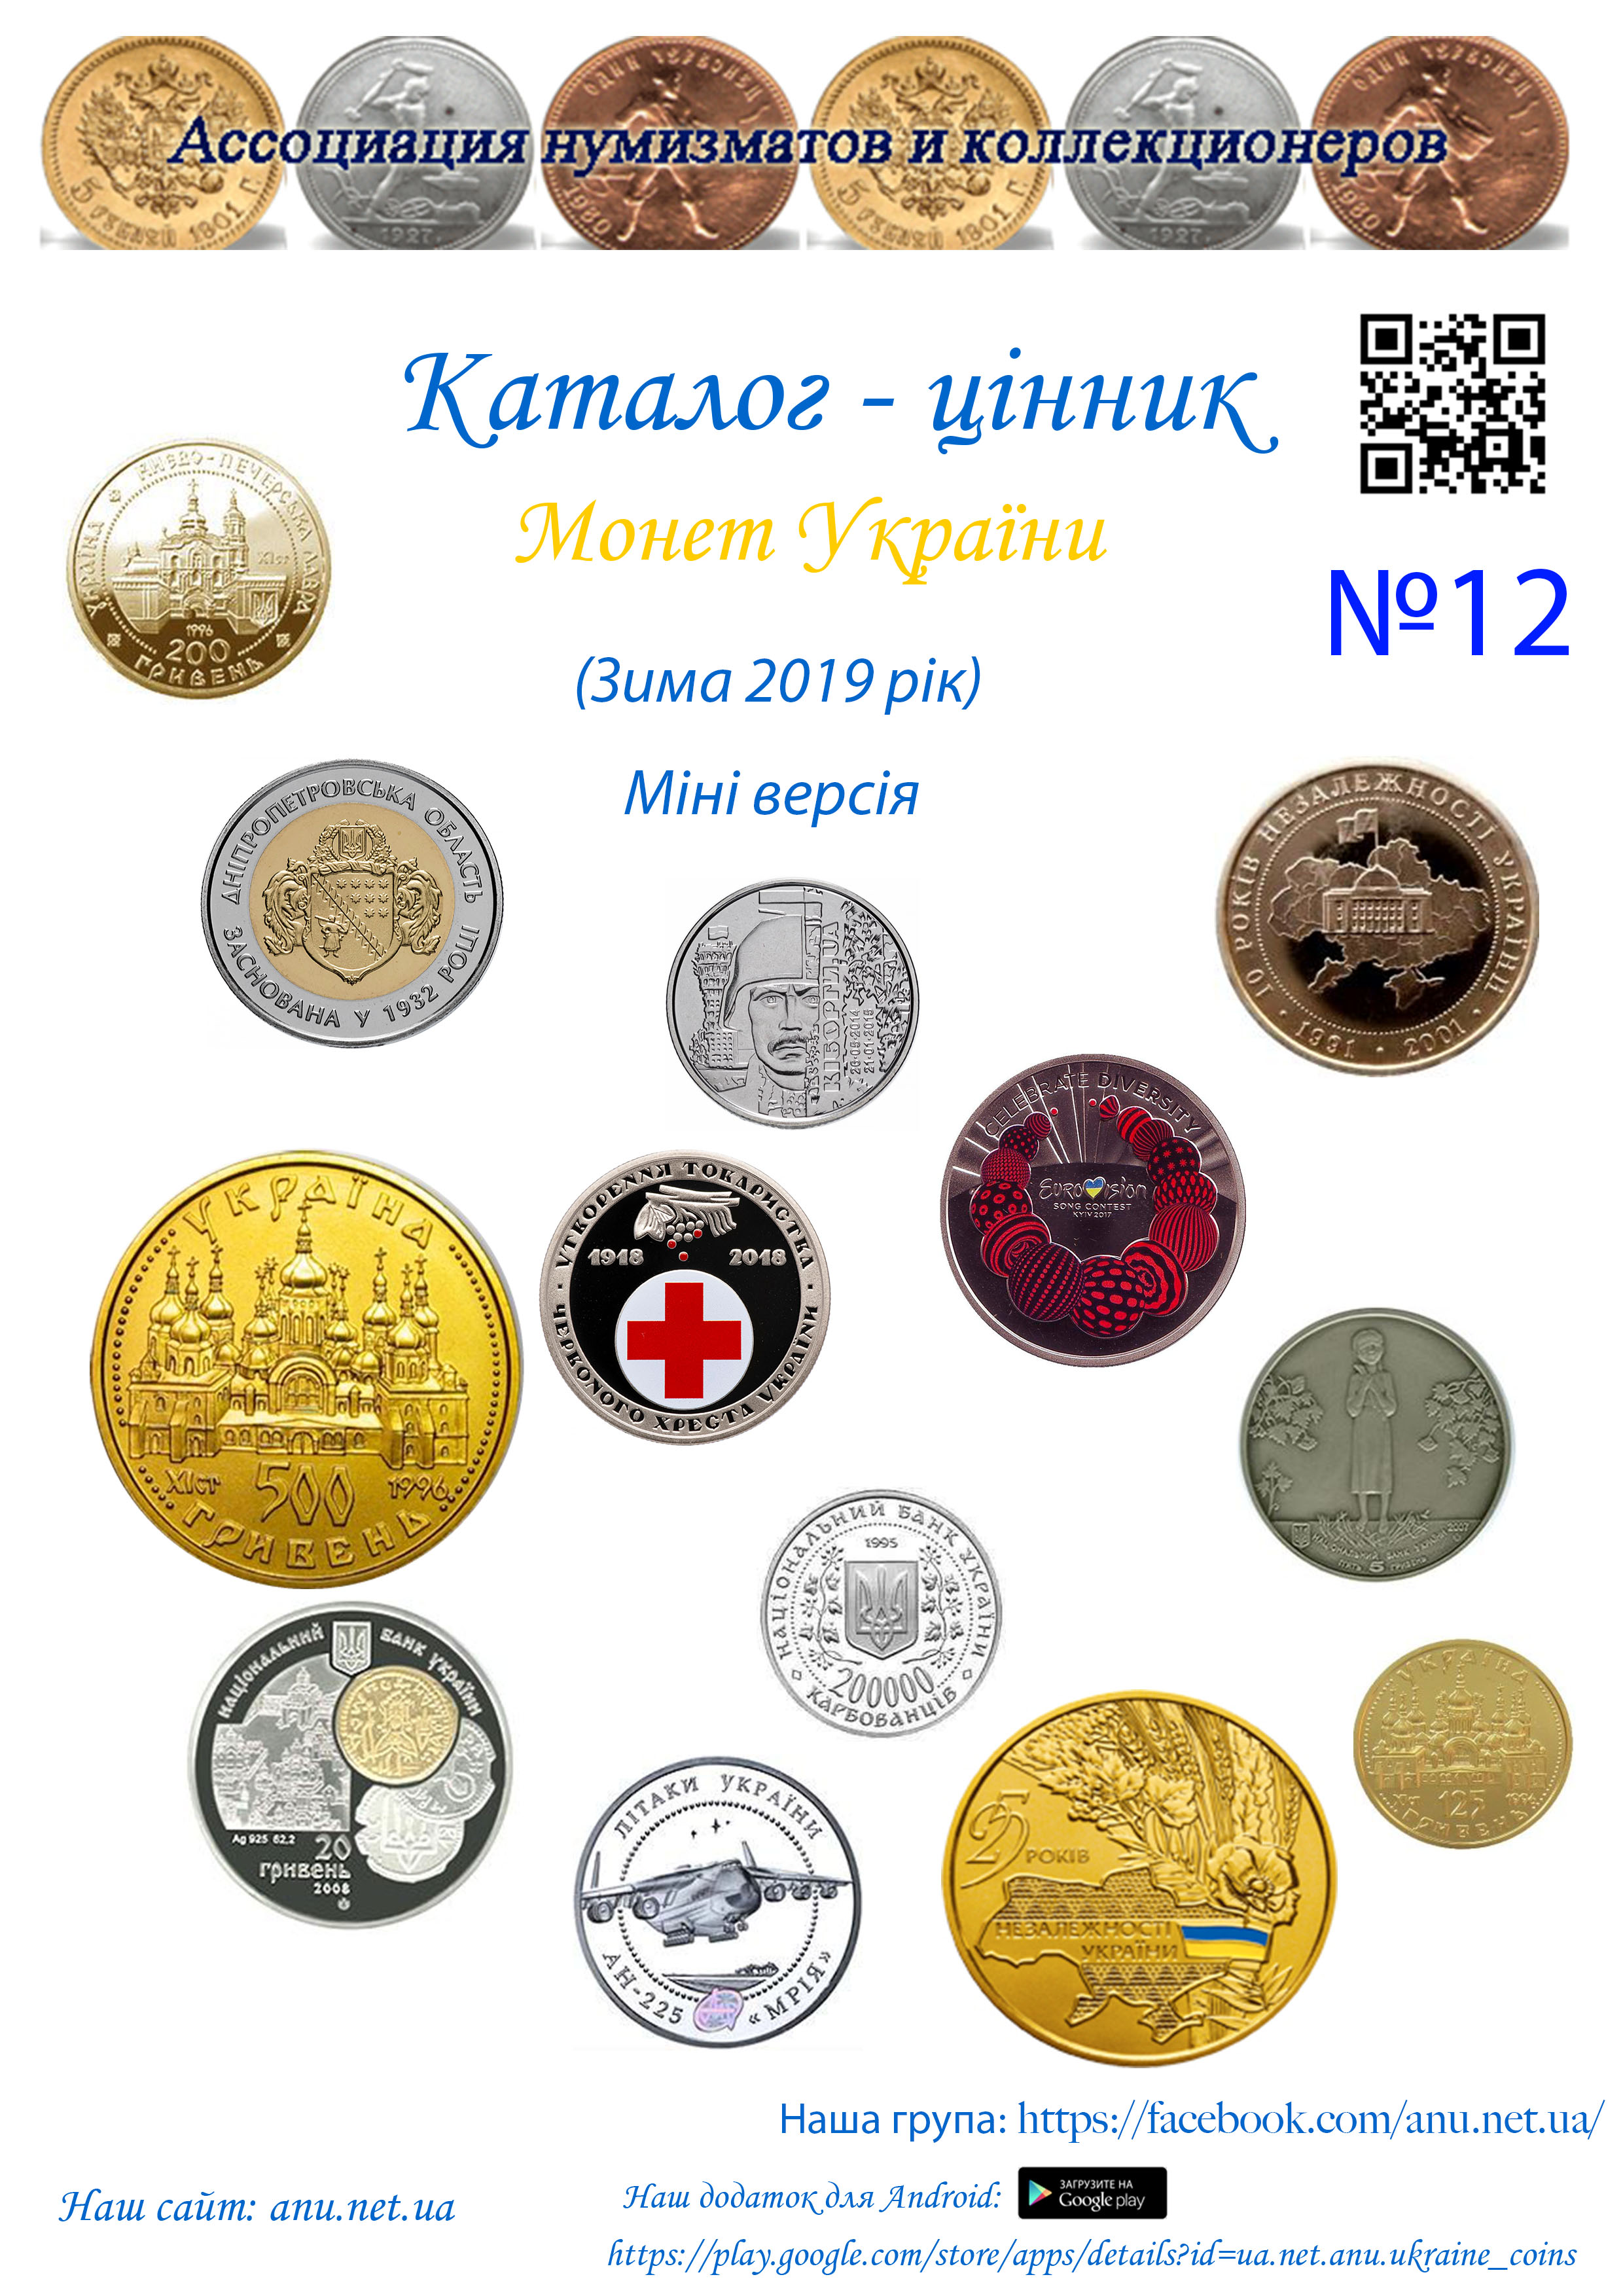 Version_12 Каталог-ценник Монеты Украины №12 - сокращенная версия